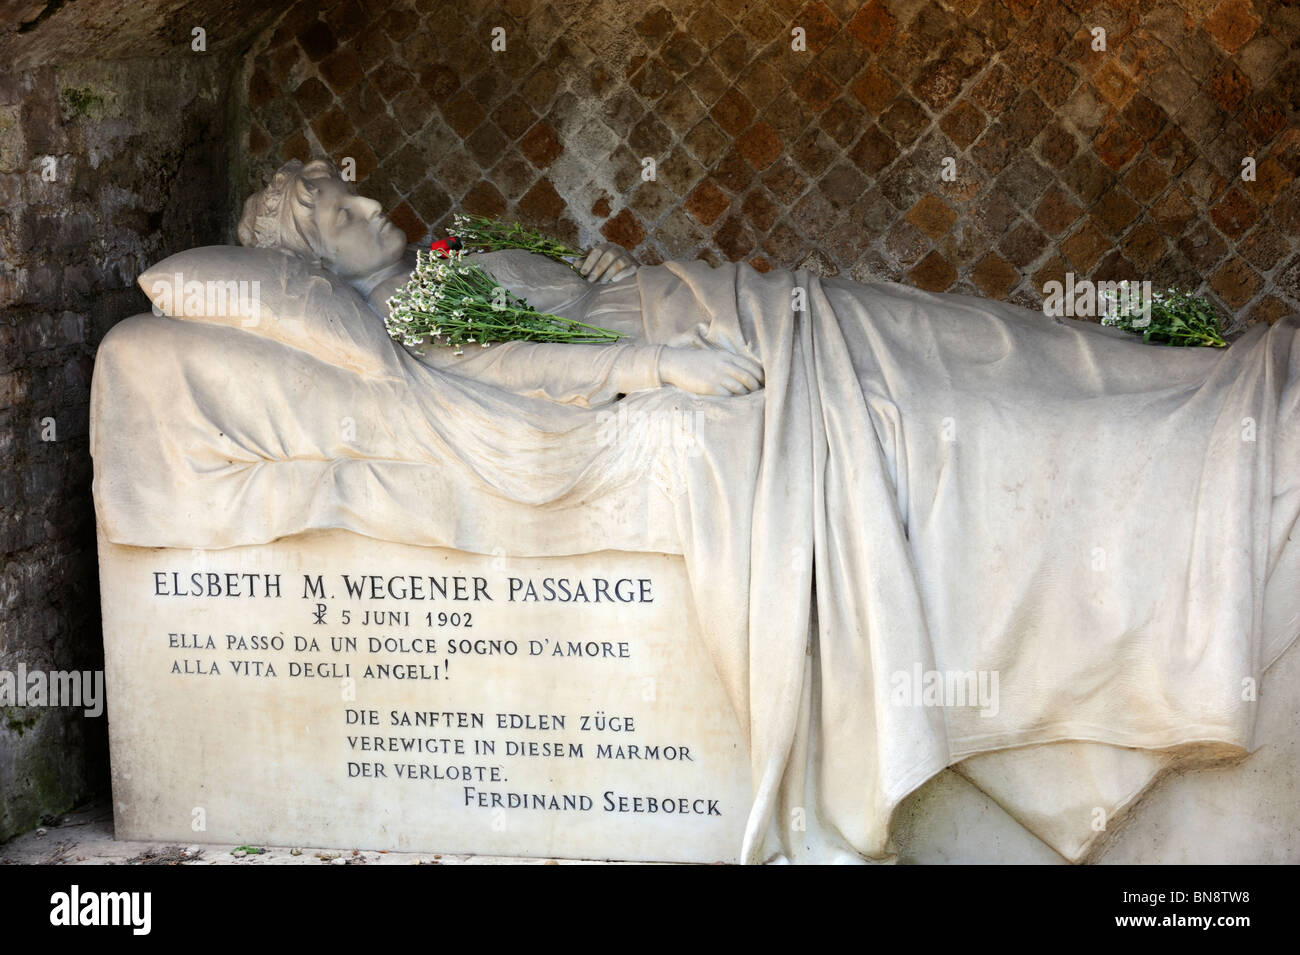 "La sposa un monumento a Elisabeth M Wegener Passarge morì 1902 al Cimitero degli Inglesi a Roma Foto Stock